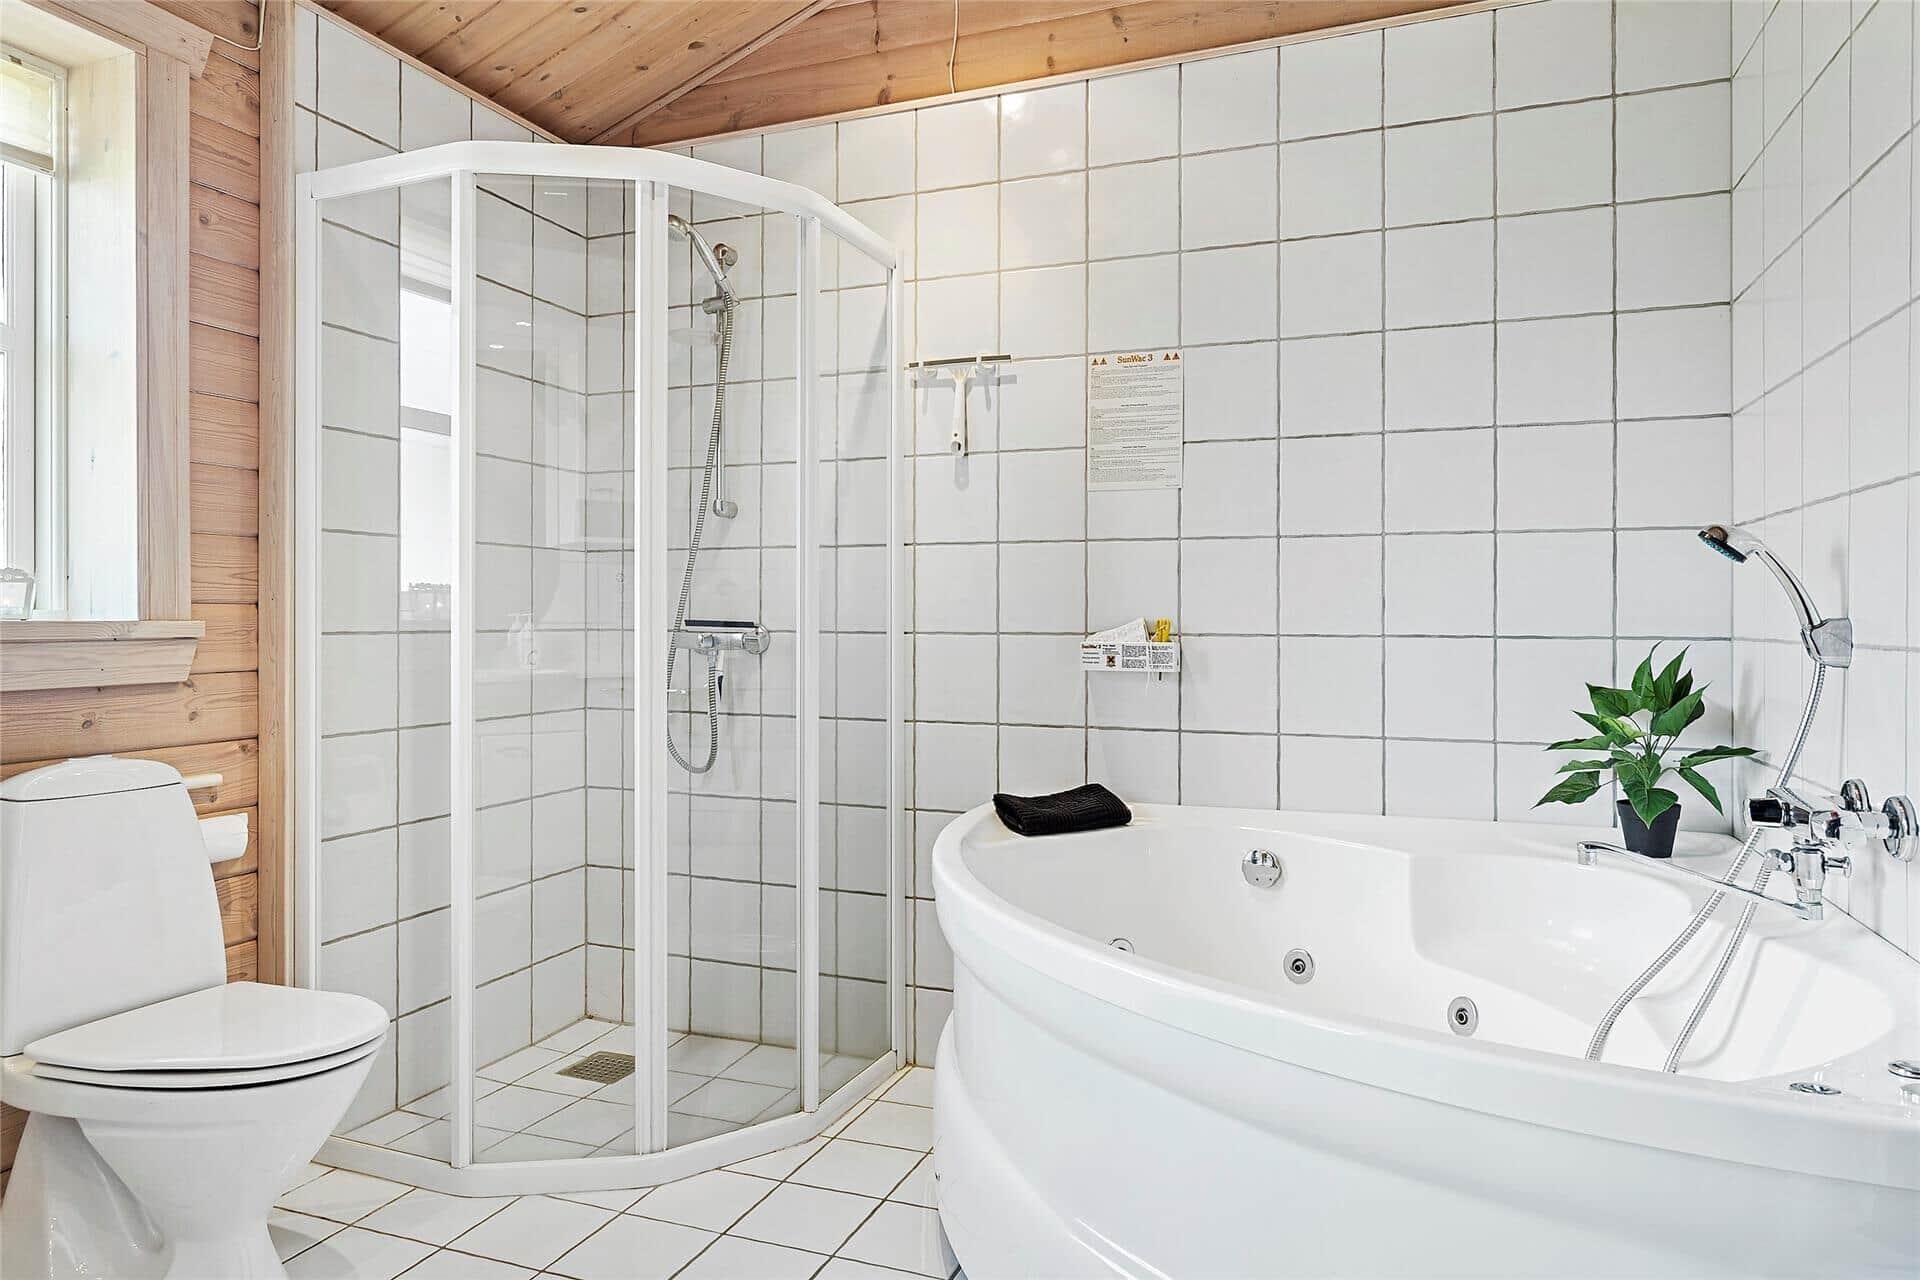 Bathroom 1 Image 3-19 Holiday-home 40505, Pøt Strandby 326, DK - 7130 Juelsminde